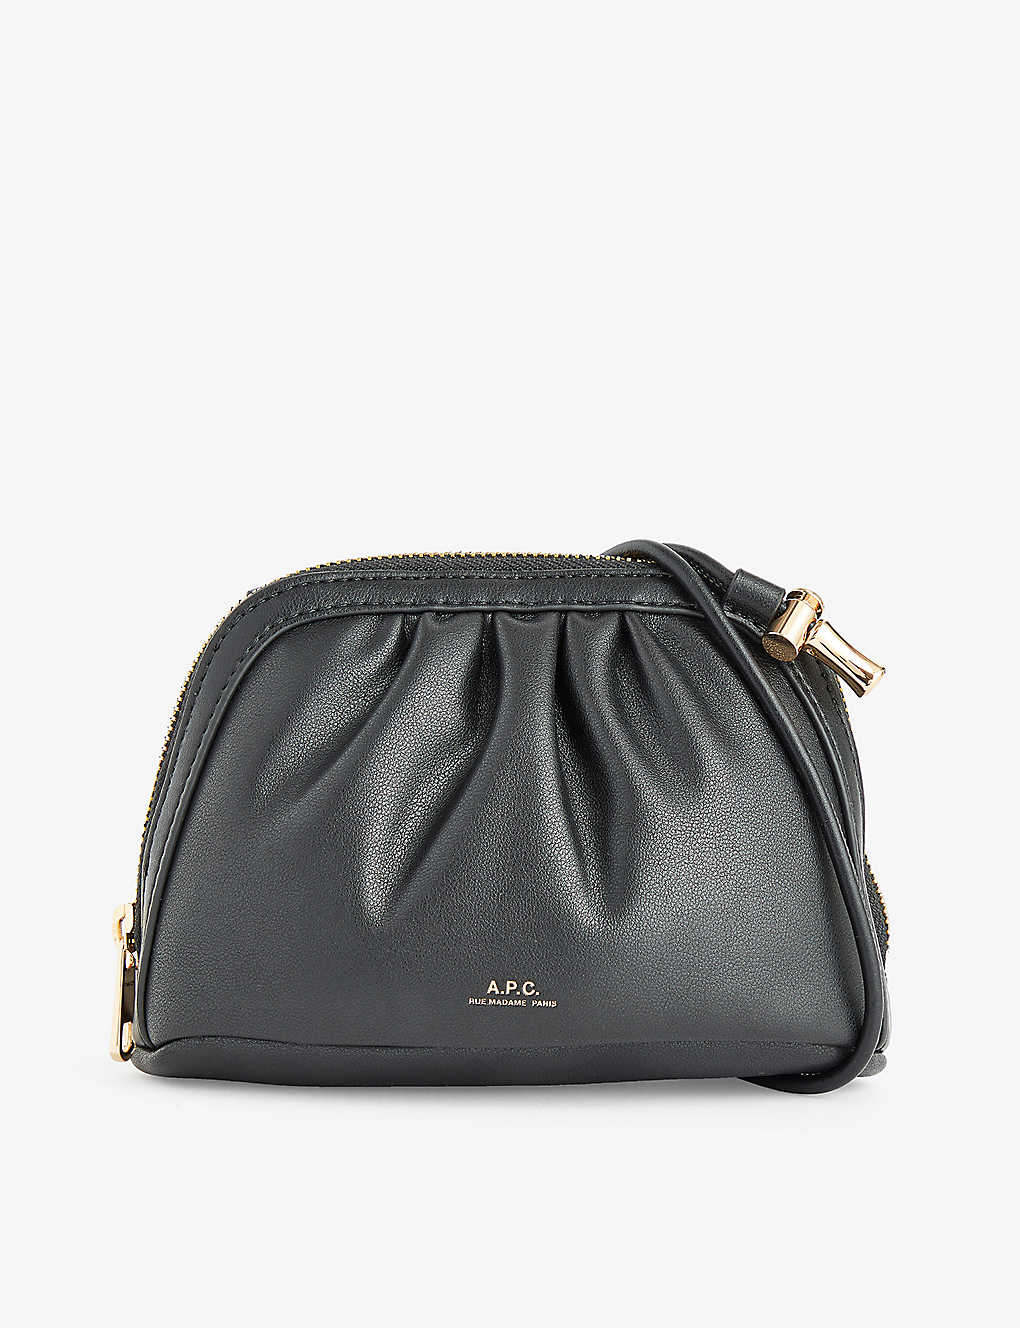 Apc Womens Noir Bourse Ninon Faux Leather Cross-body Bag